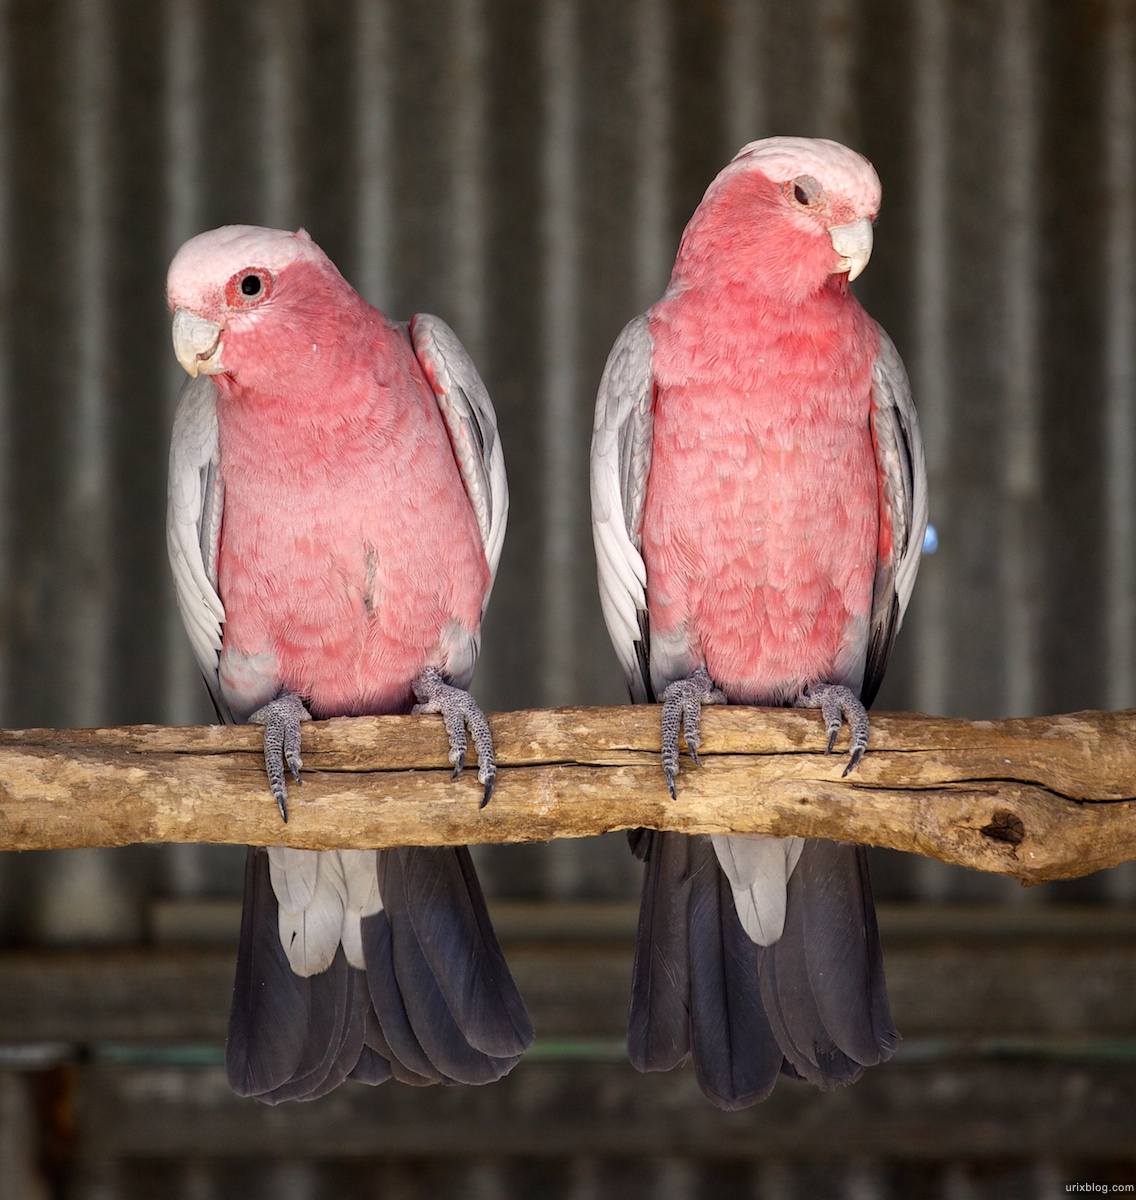 2011 South Australia, Kangaroo Island, Остров Кенгуру, Южная Австралия, Parndana Wildlife Park, parrot, попугай